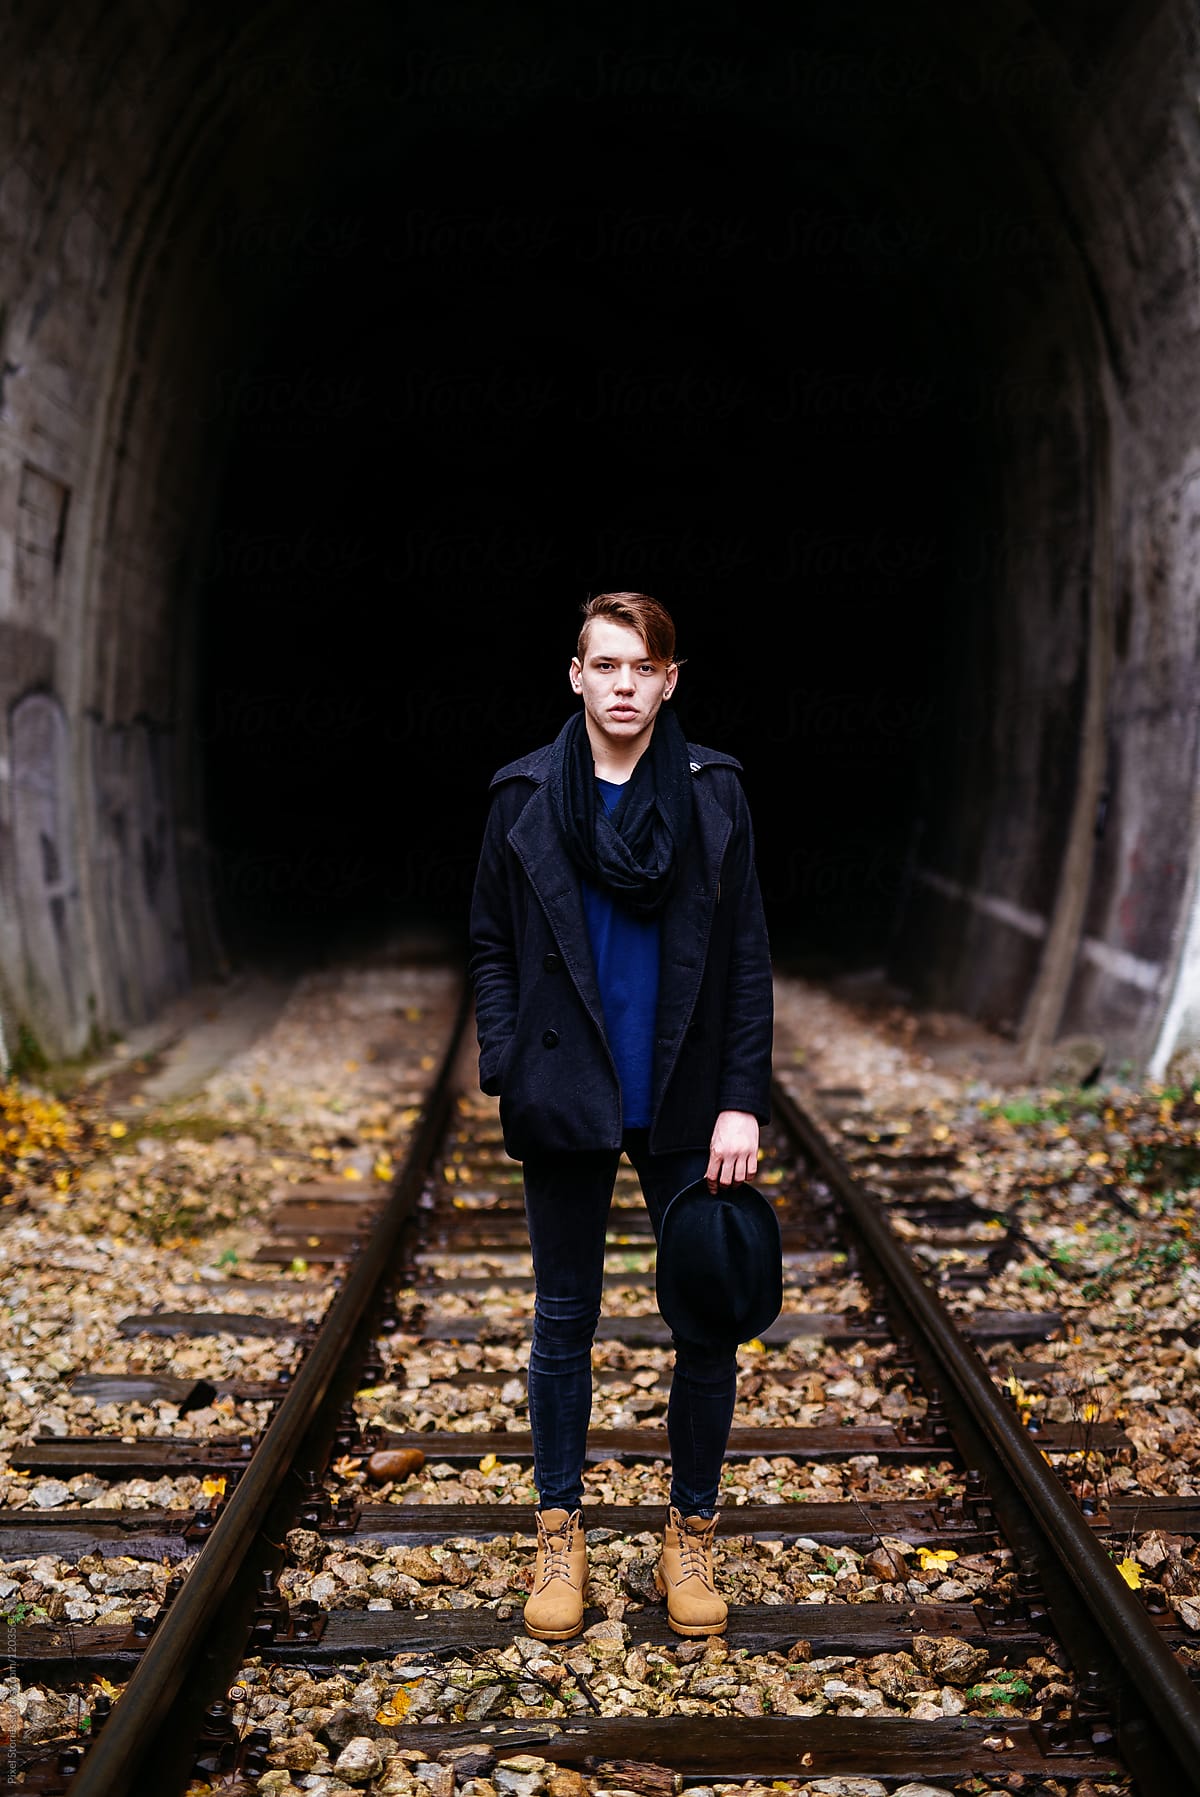 Premium Photo | Caucasian teenager posing near on railway track, freedom